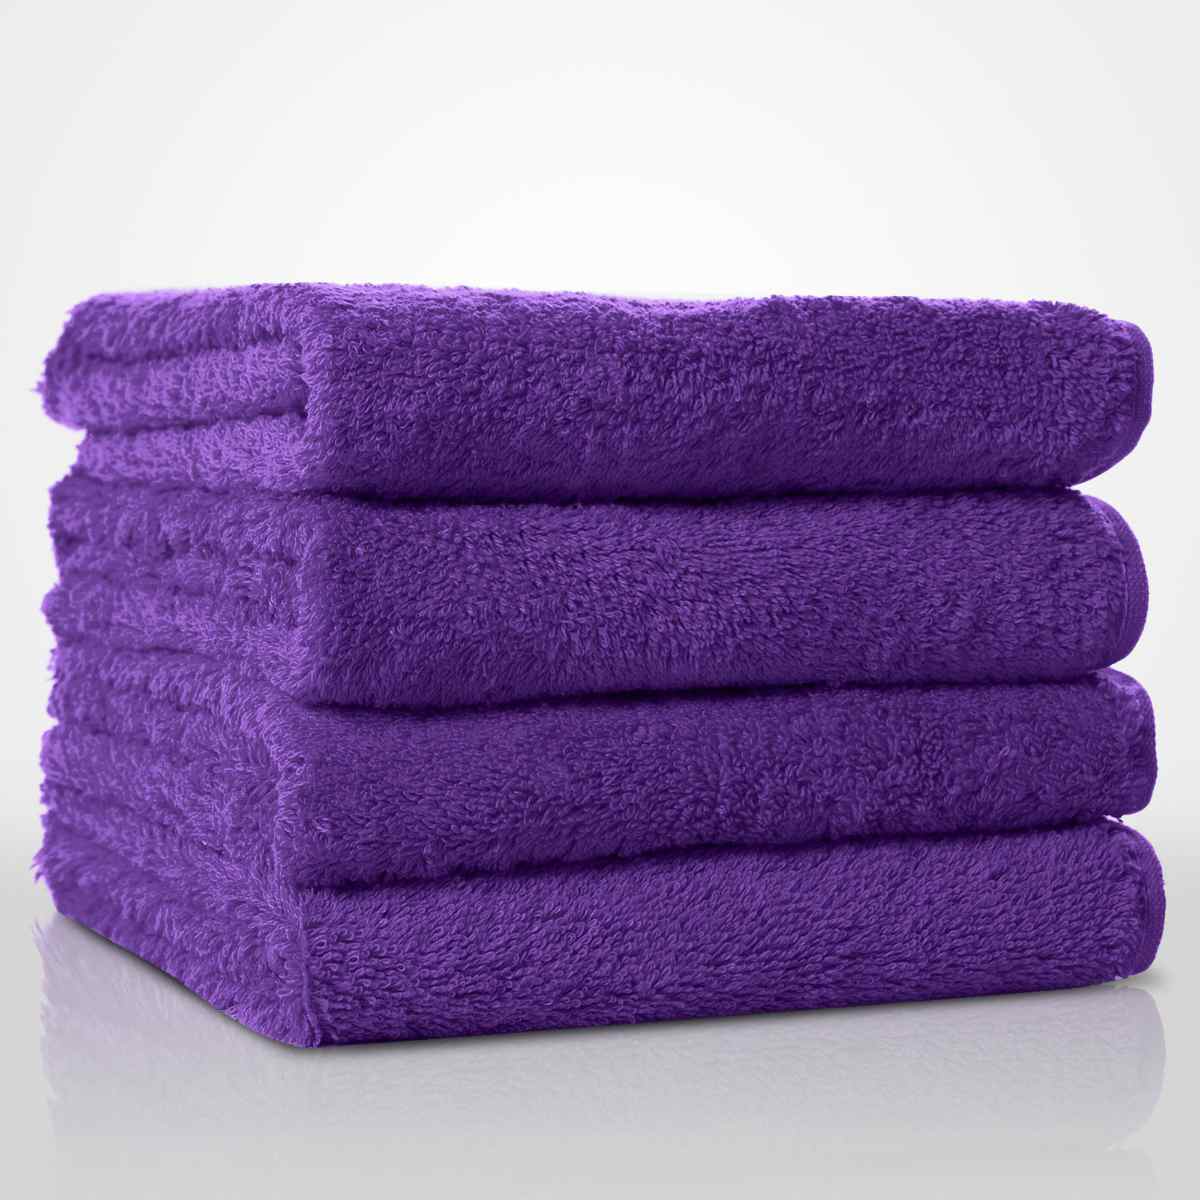 https://robemart.com/blog/wp-content/webpc-passthru.php?src=https://robemart.com/blog/wp-content/uploads/2019/10/16-x-29-100-turkish-cotton-purple-terry-hand-towel-wholesale-towels.jpg&nocache=1